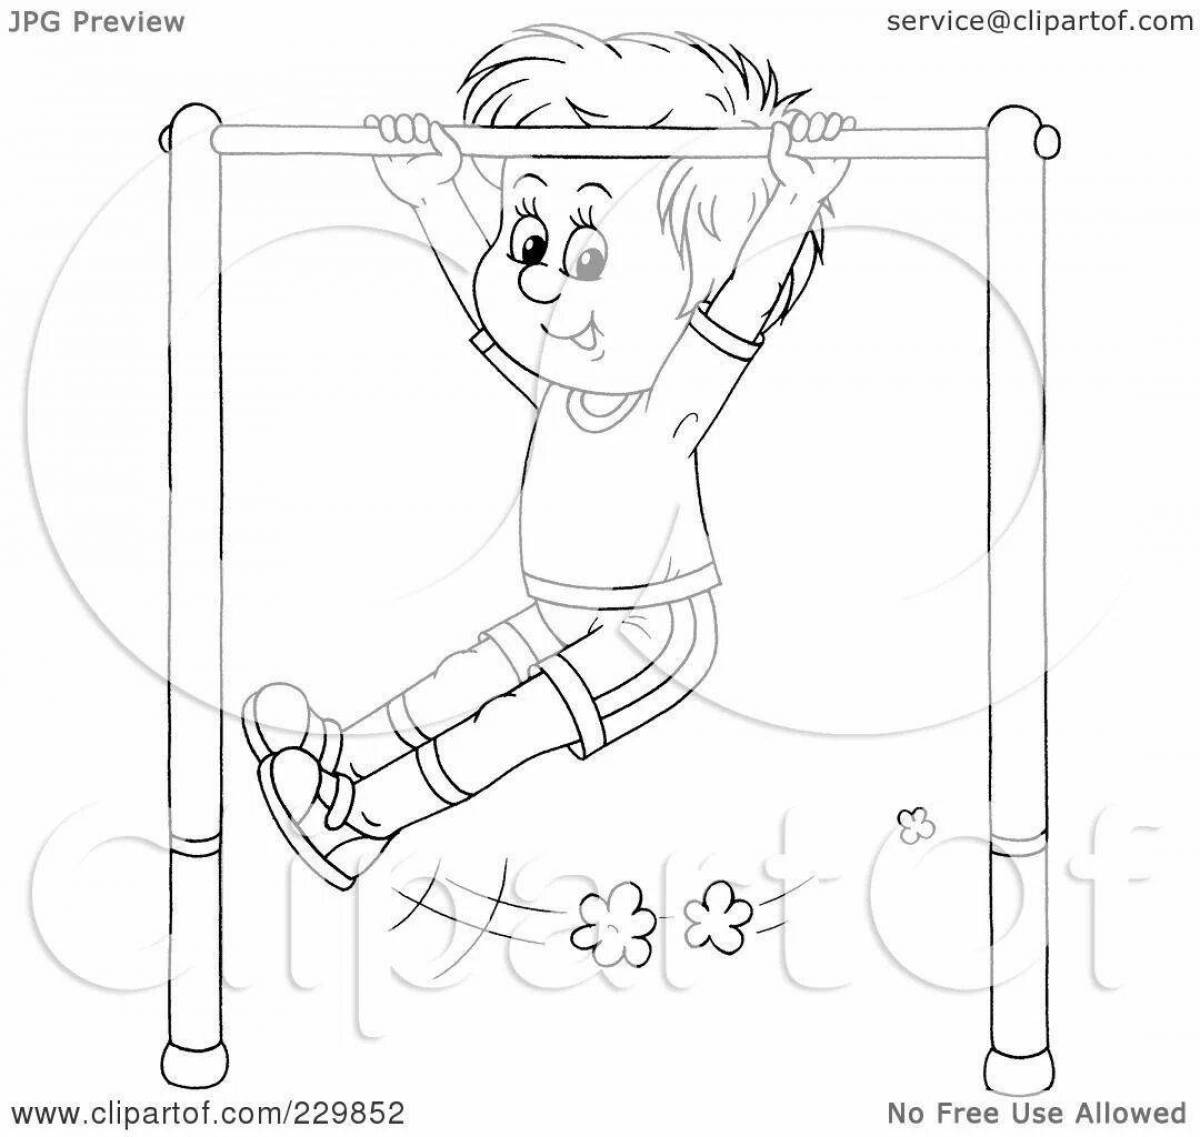 Рисунки на тему гто про спорт для детей